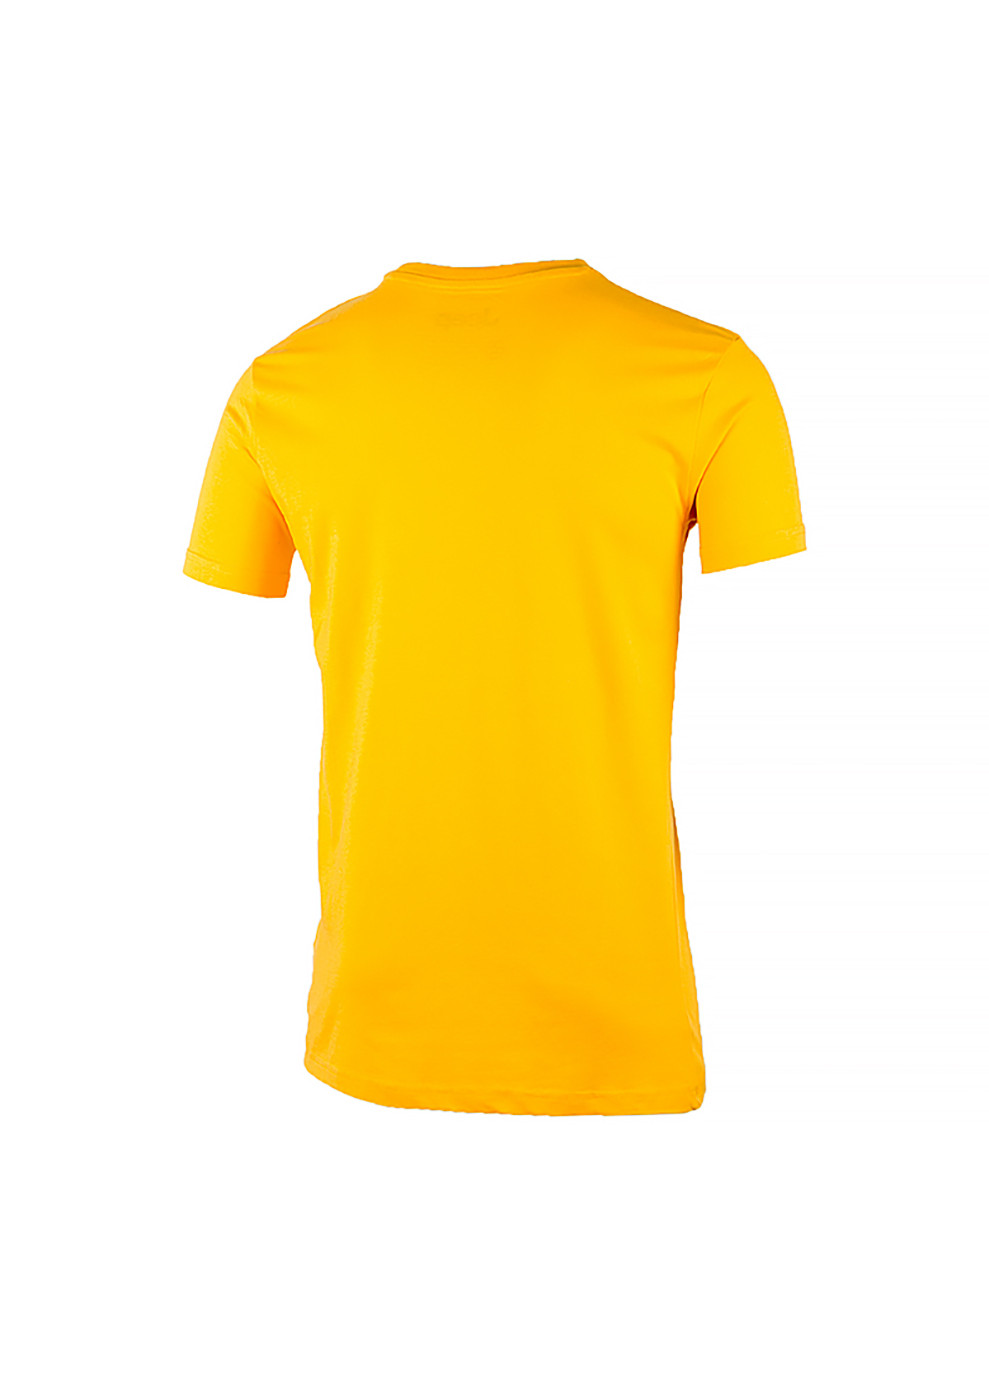 Оранжевая мужская футболка t-shirt j22w оранжевый l (o102580-y248 l) Jeep